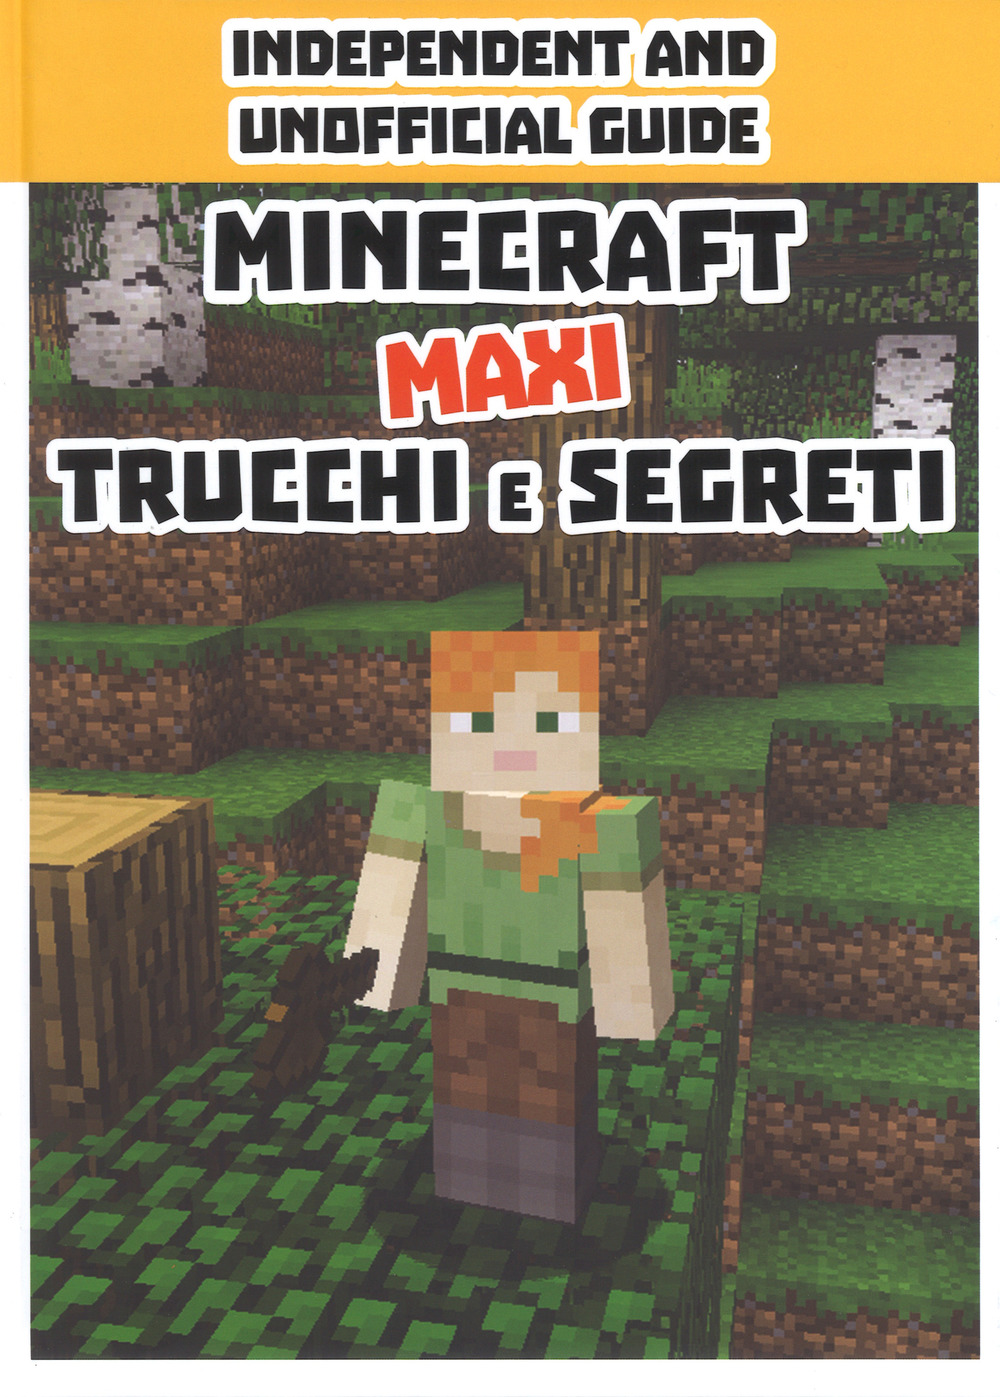 Minecraft trucchi e segreti. Maxi. Independent and unofficial guide